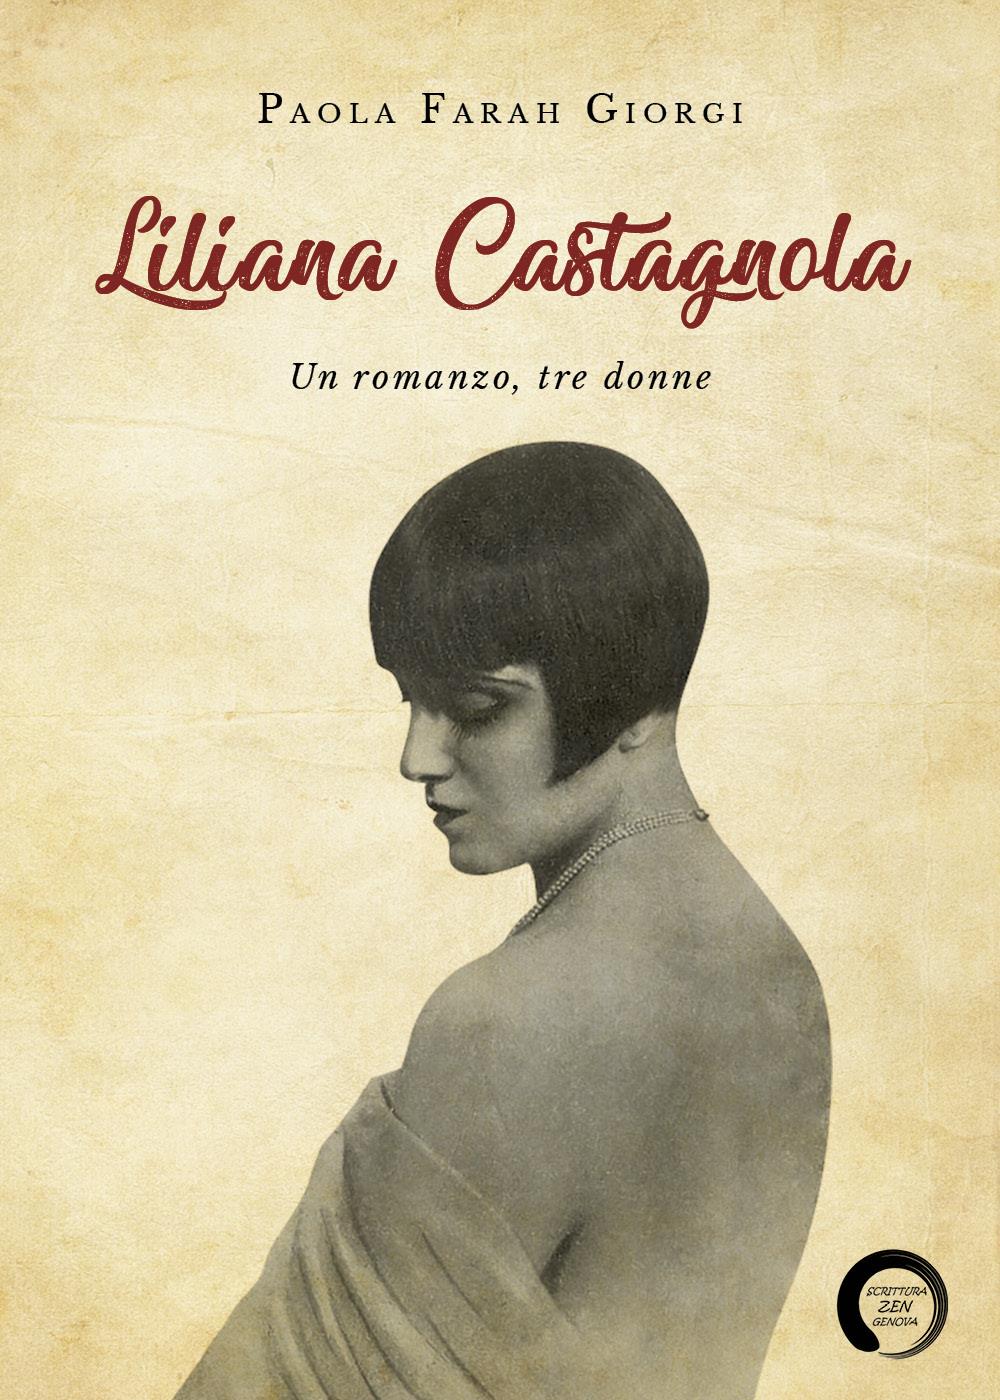 Liliana Castagnola